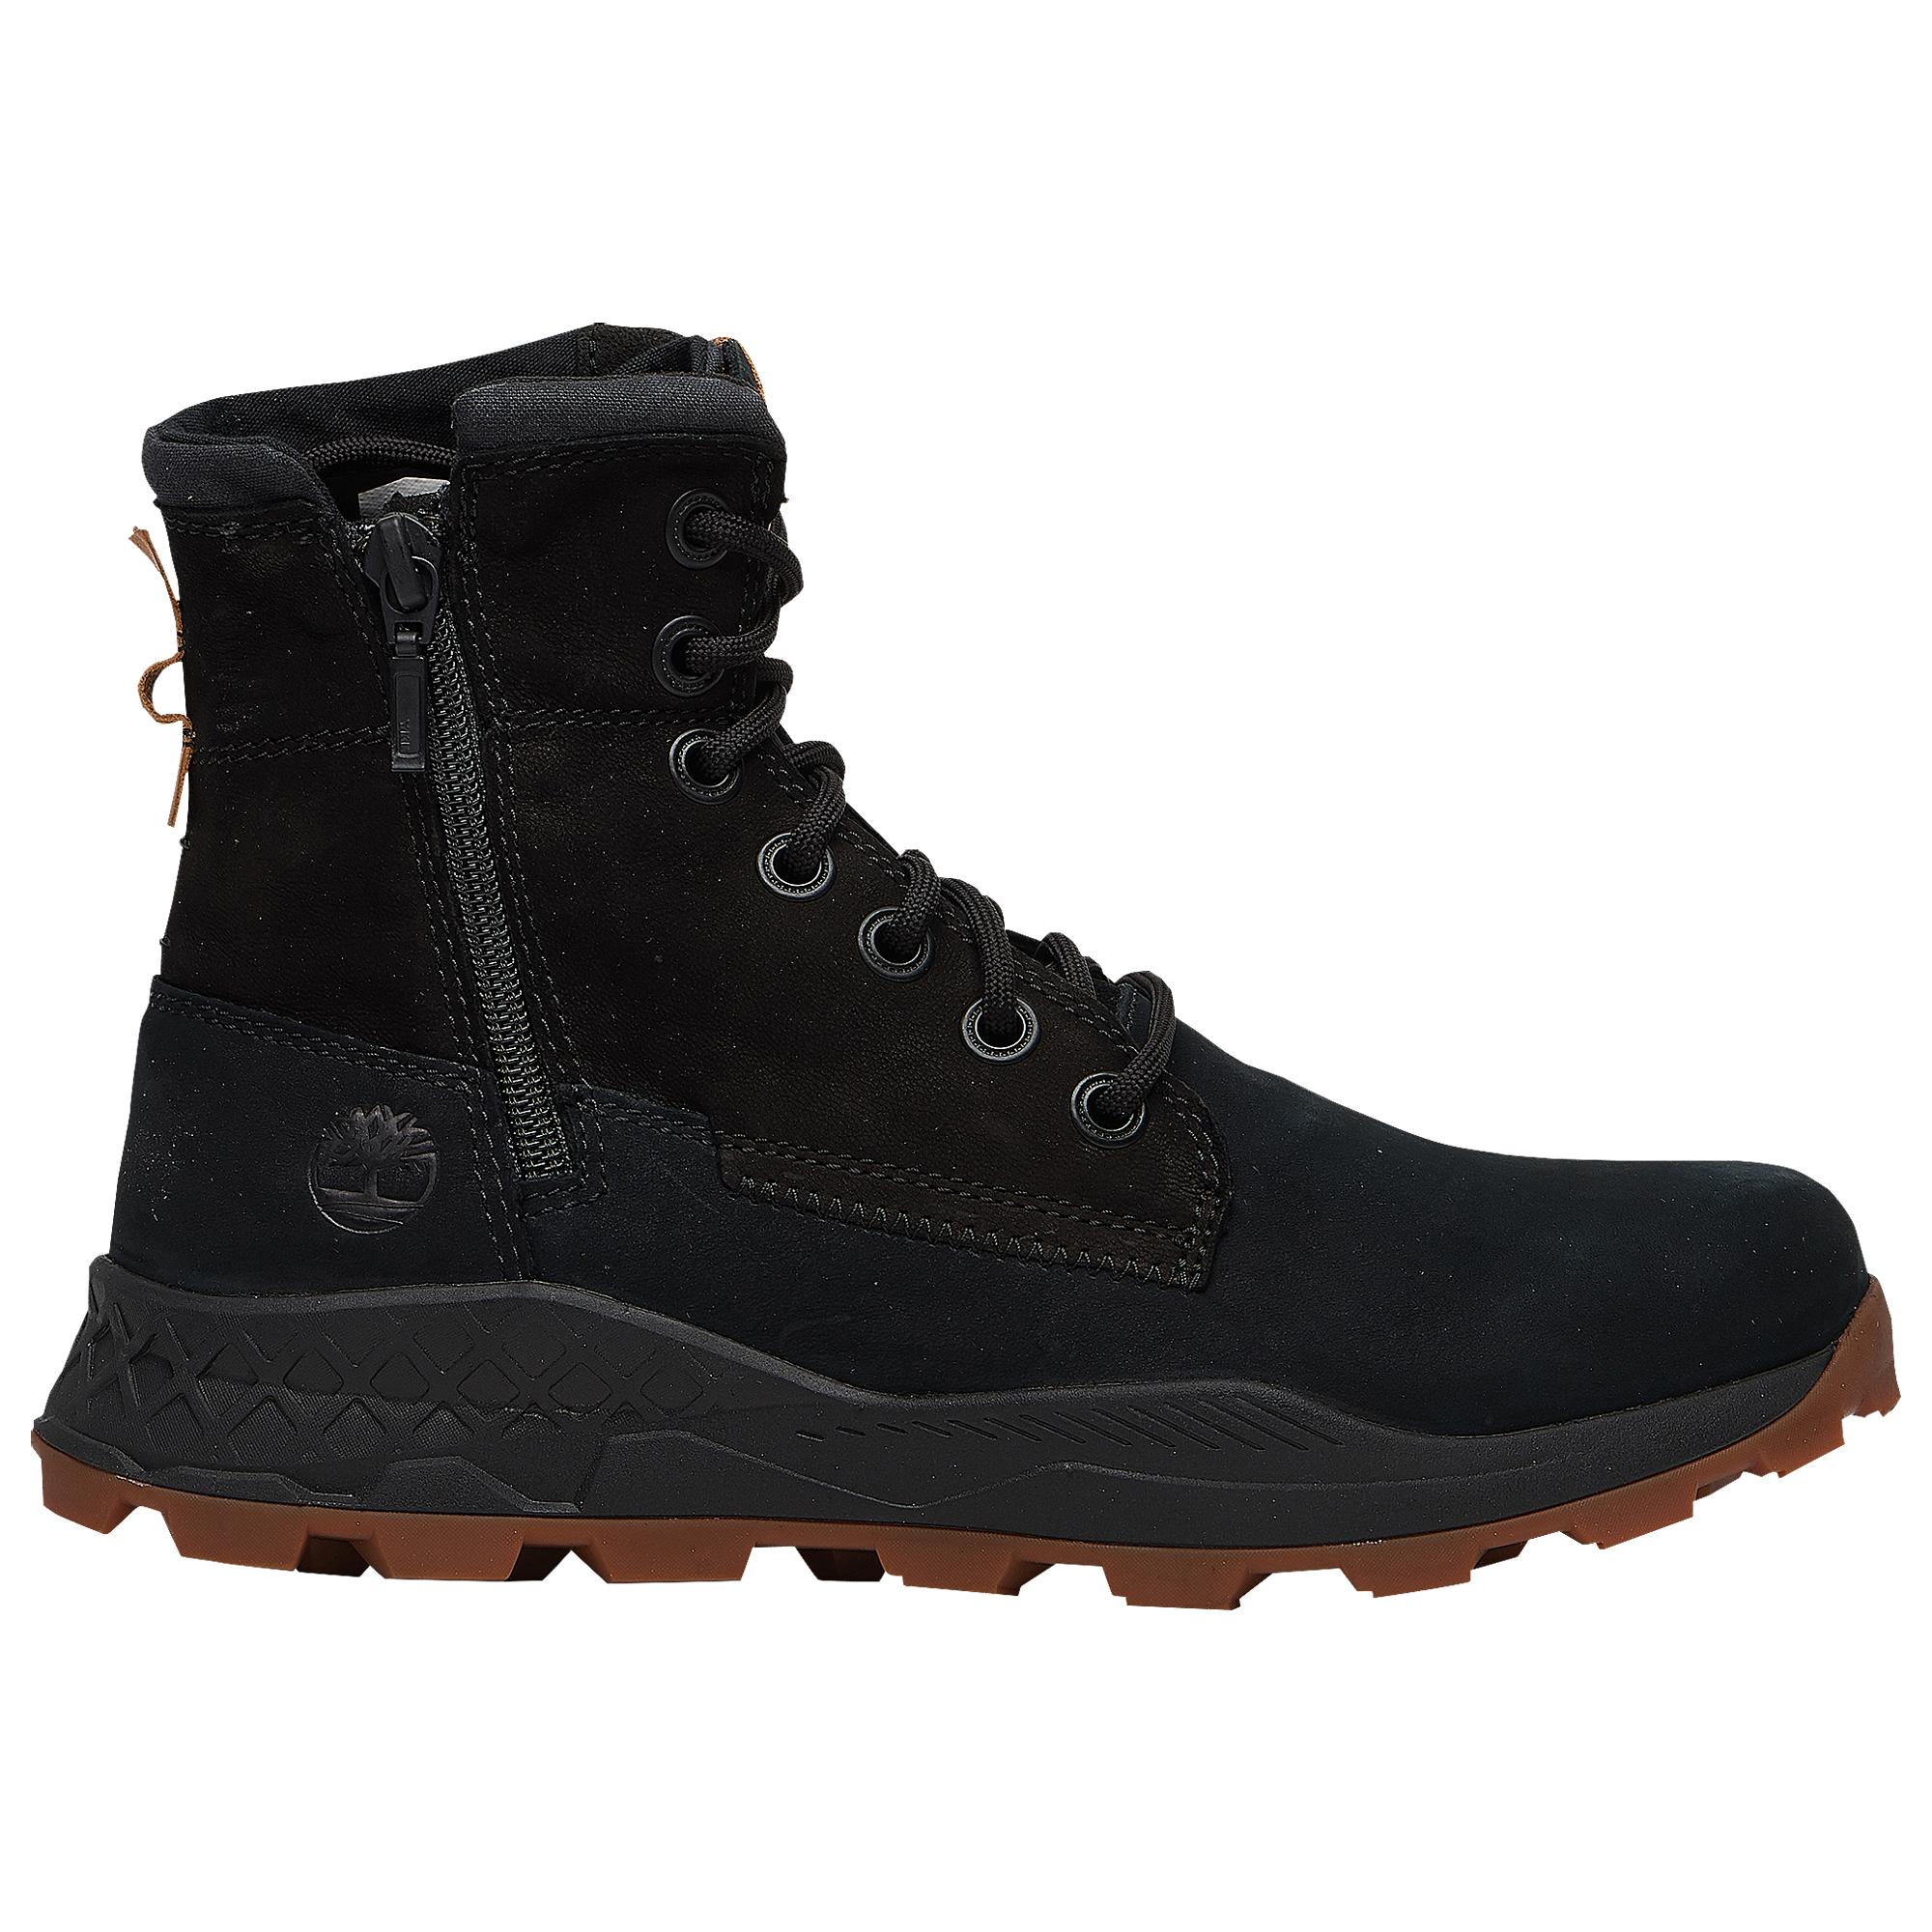 Timberland Brooklyn Zip Outdoor Boots in Black for Men - Lyst